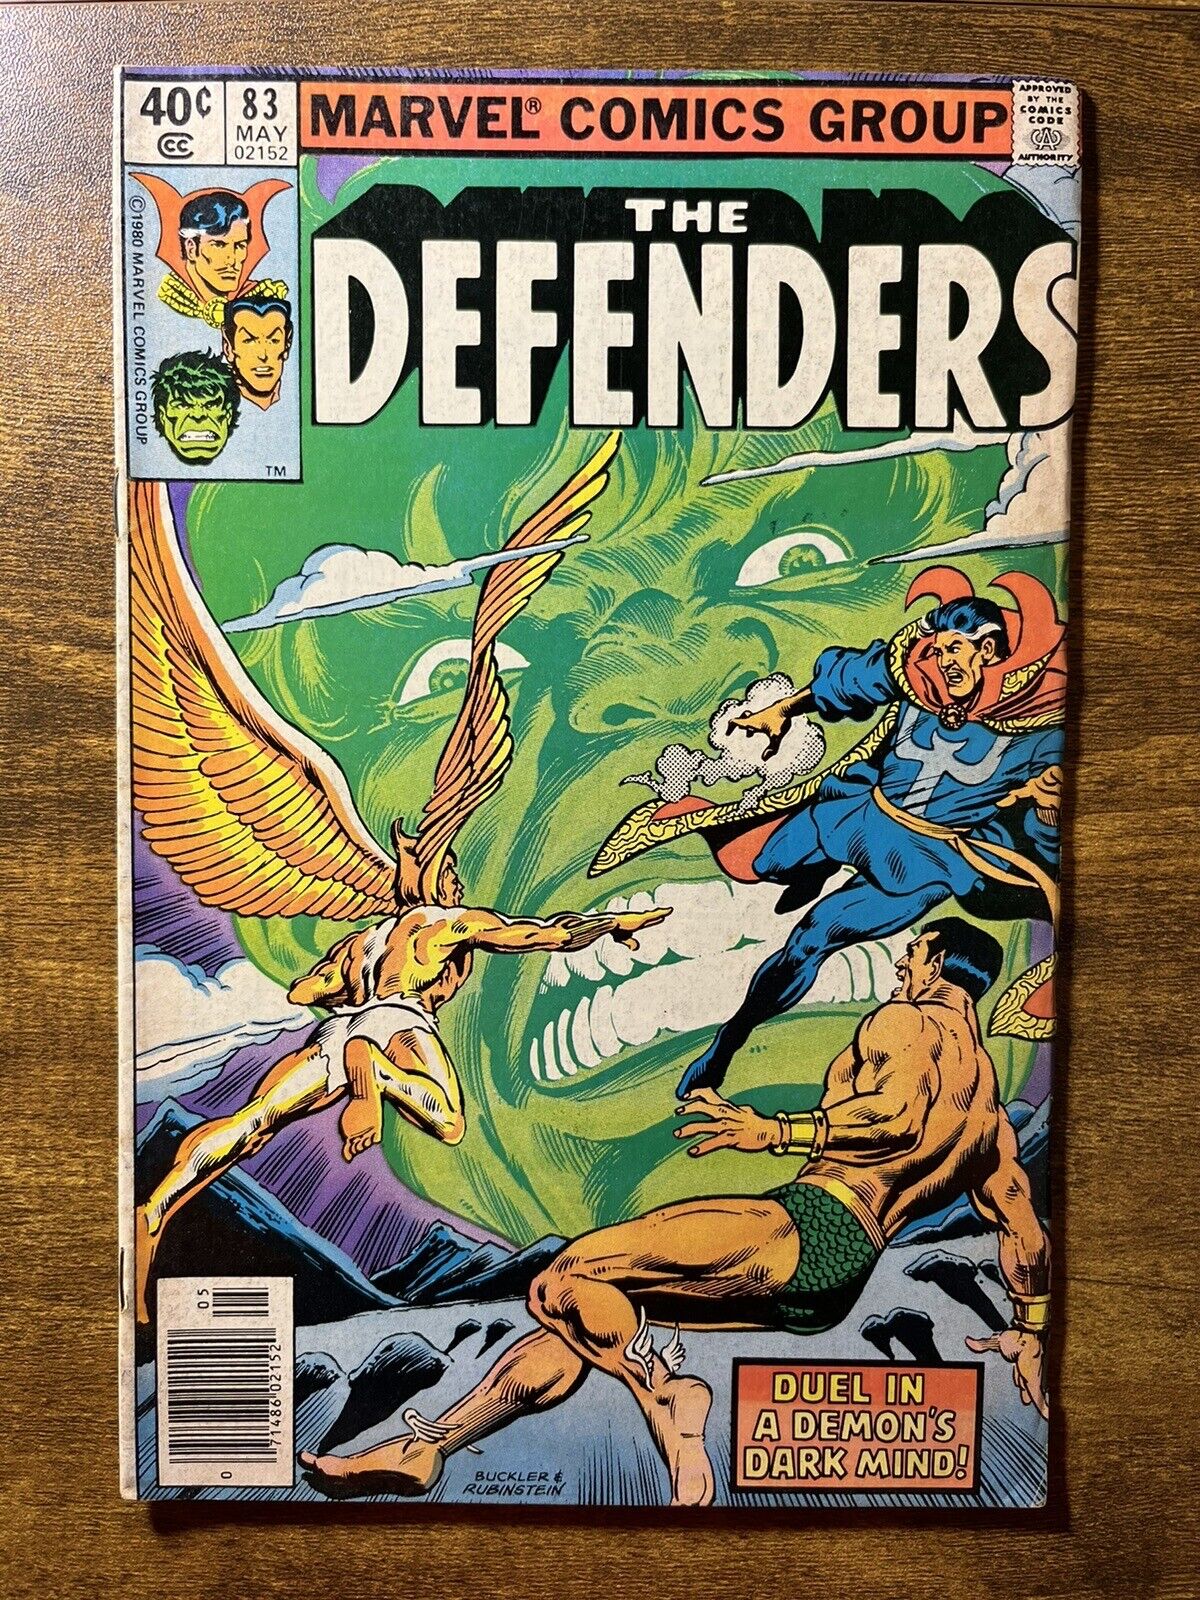 THE DEFENDERS 83 NEWSSTAND DOCTOR STRANGE RICH BUCKLER COVER MARVEL COMICS 1980